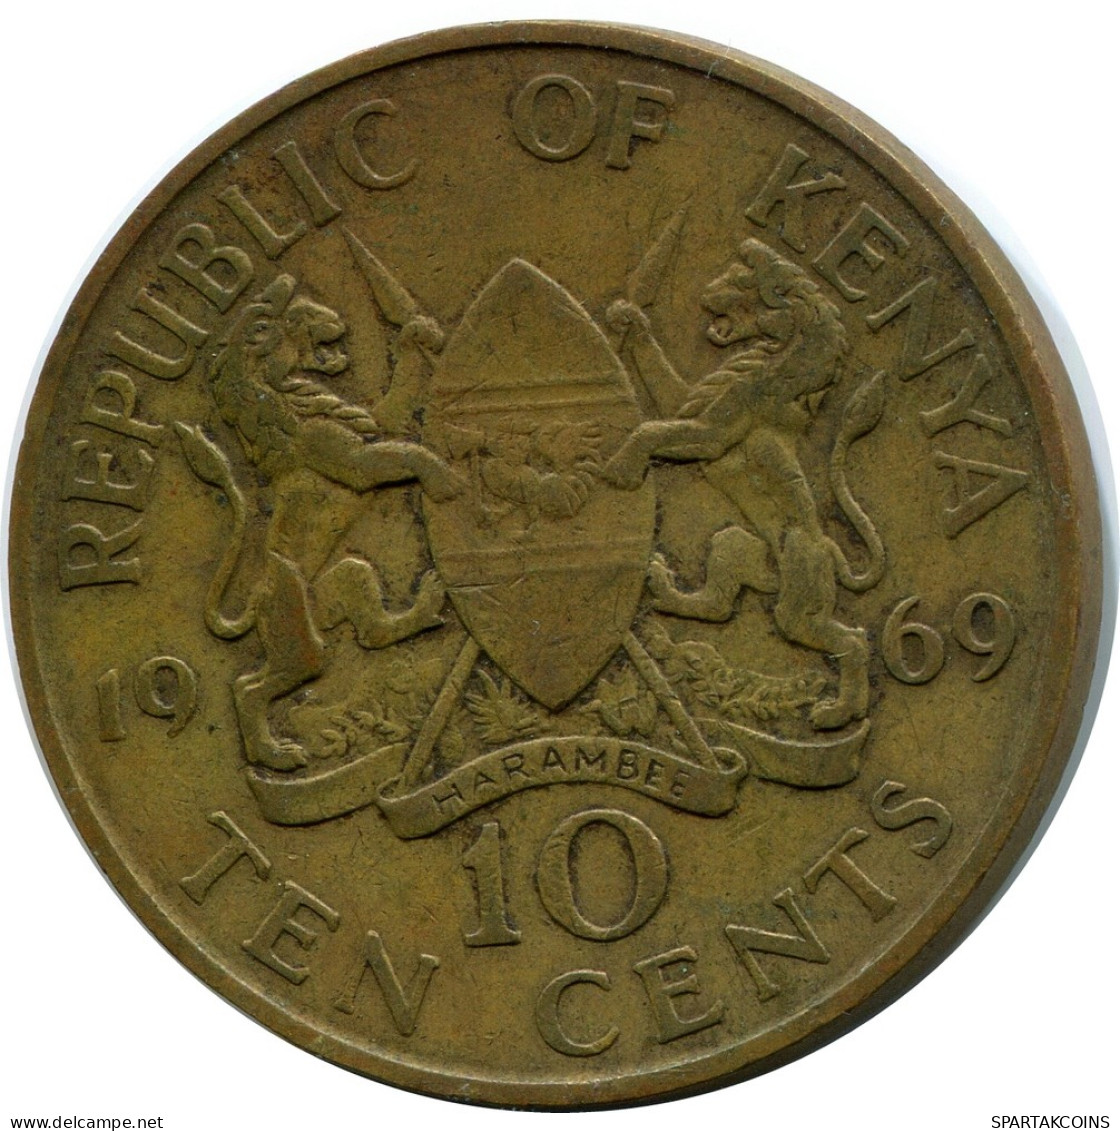 10 CENTS 1969 KENYA Coin #AR852.U - Kenya